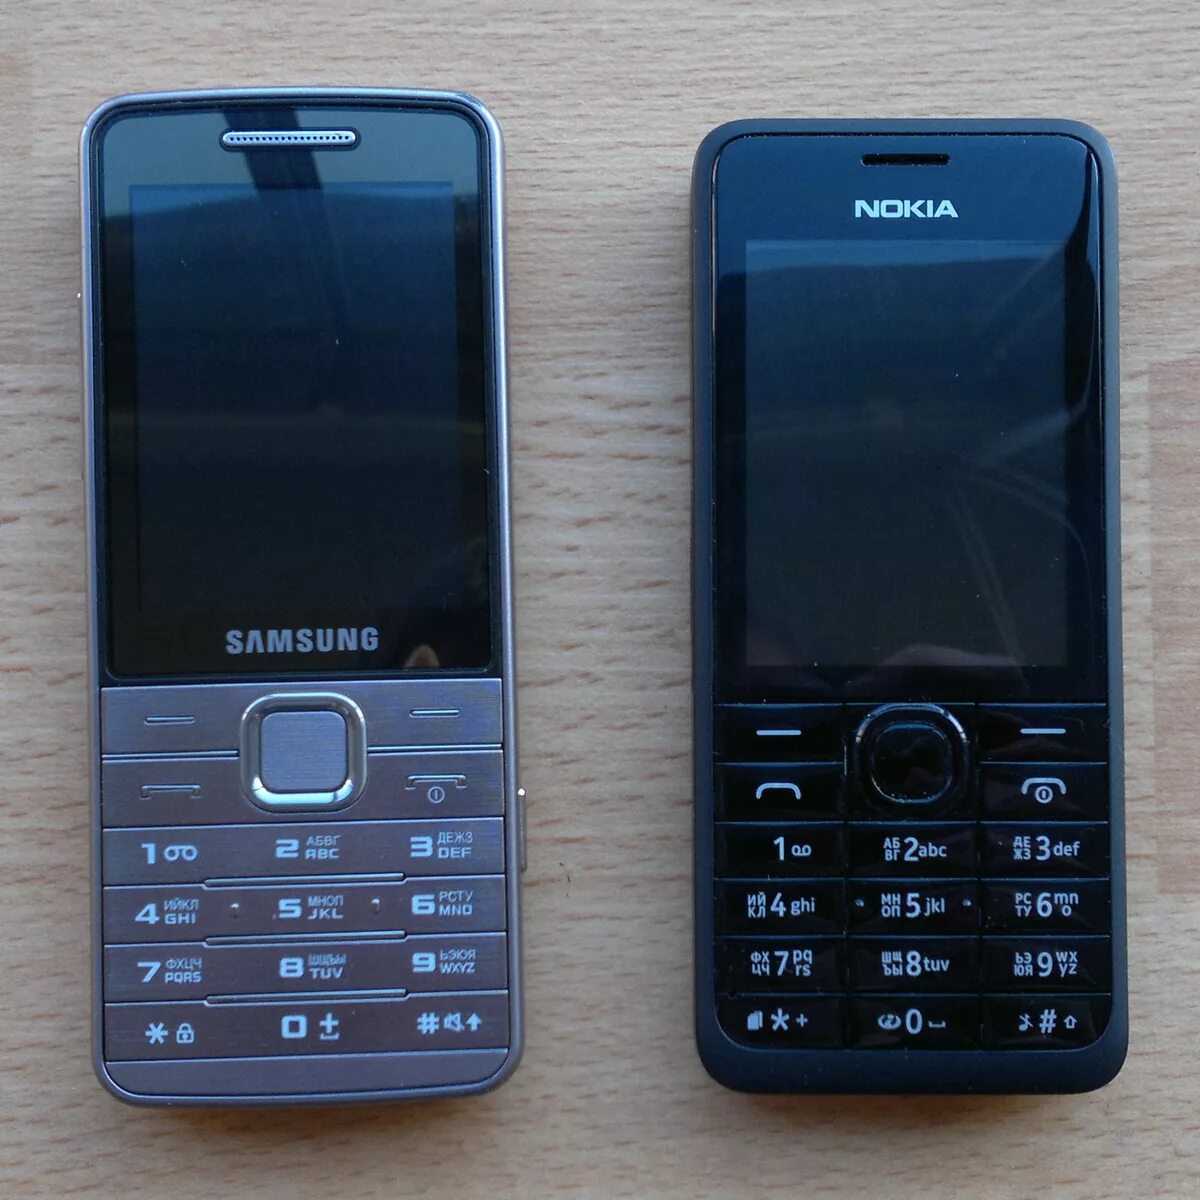 Samsung gt s5610. Samsung 5610. Самсунг GTS 5610. Nokia s5610.